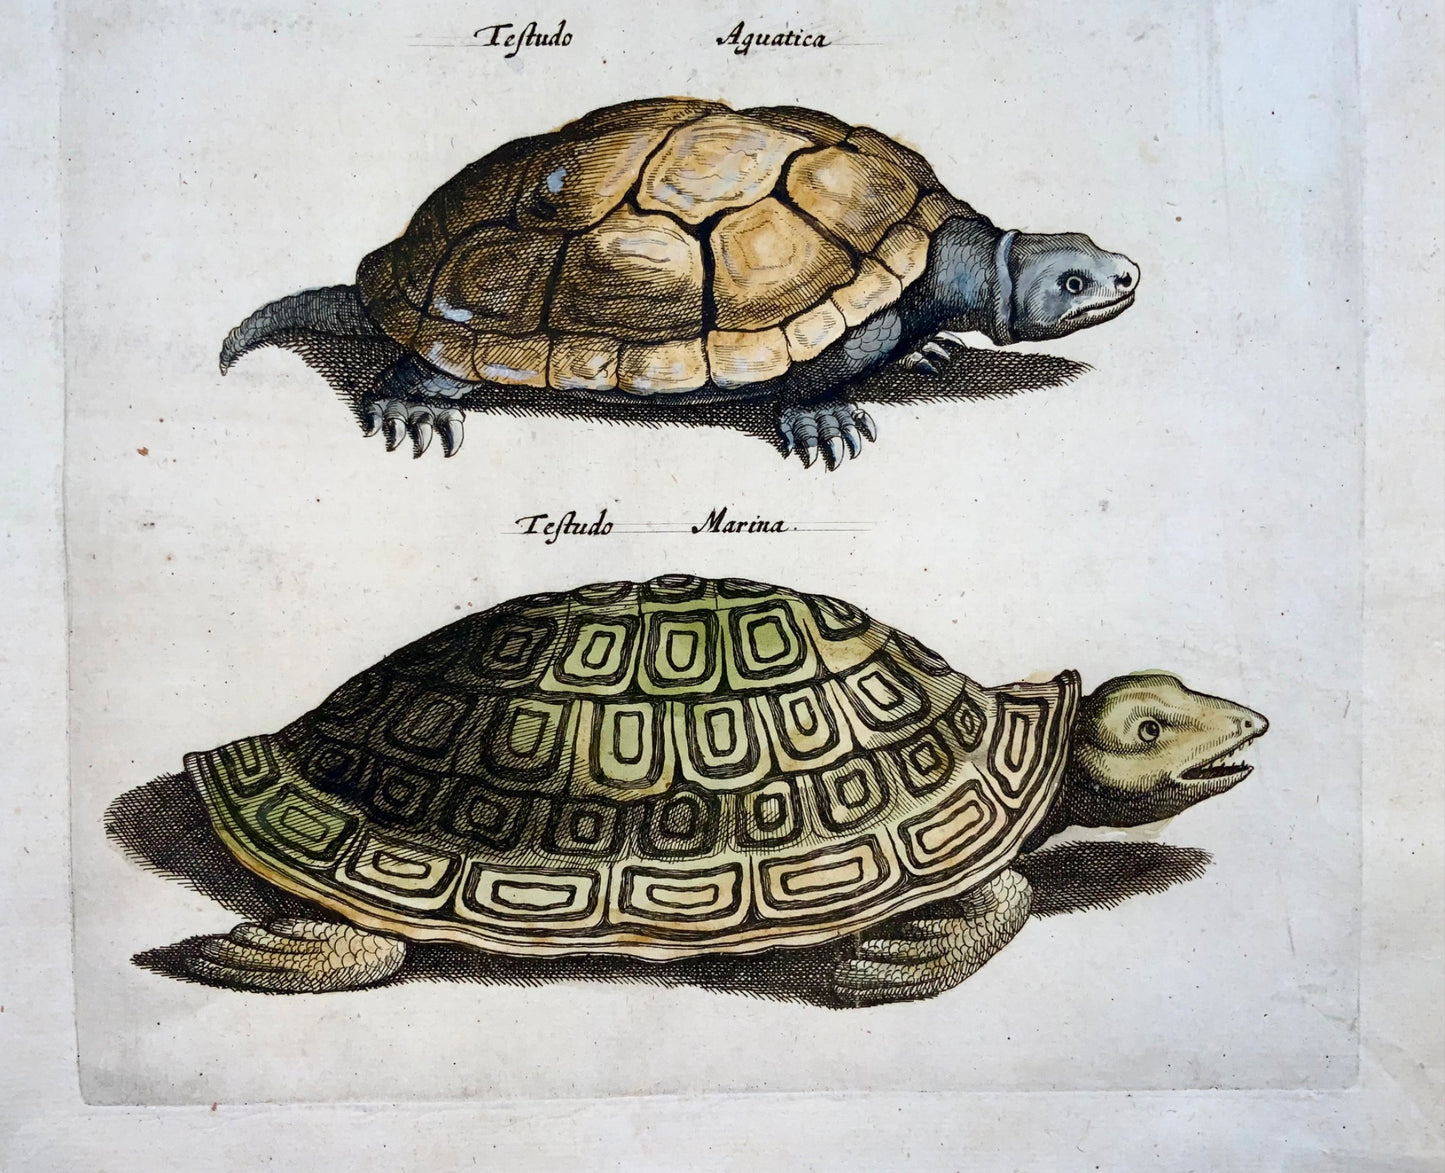 1657 Mat. Merian - Turtles Tortoise Amphibians - Folio hand coloured engraving